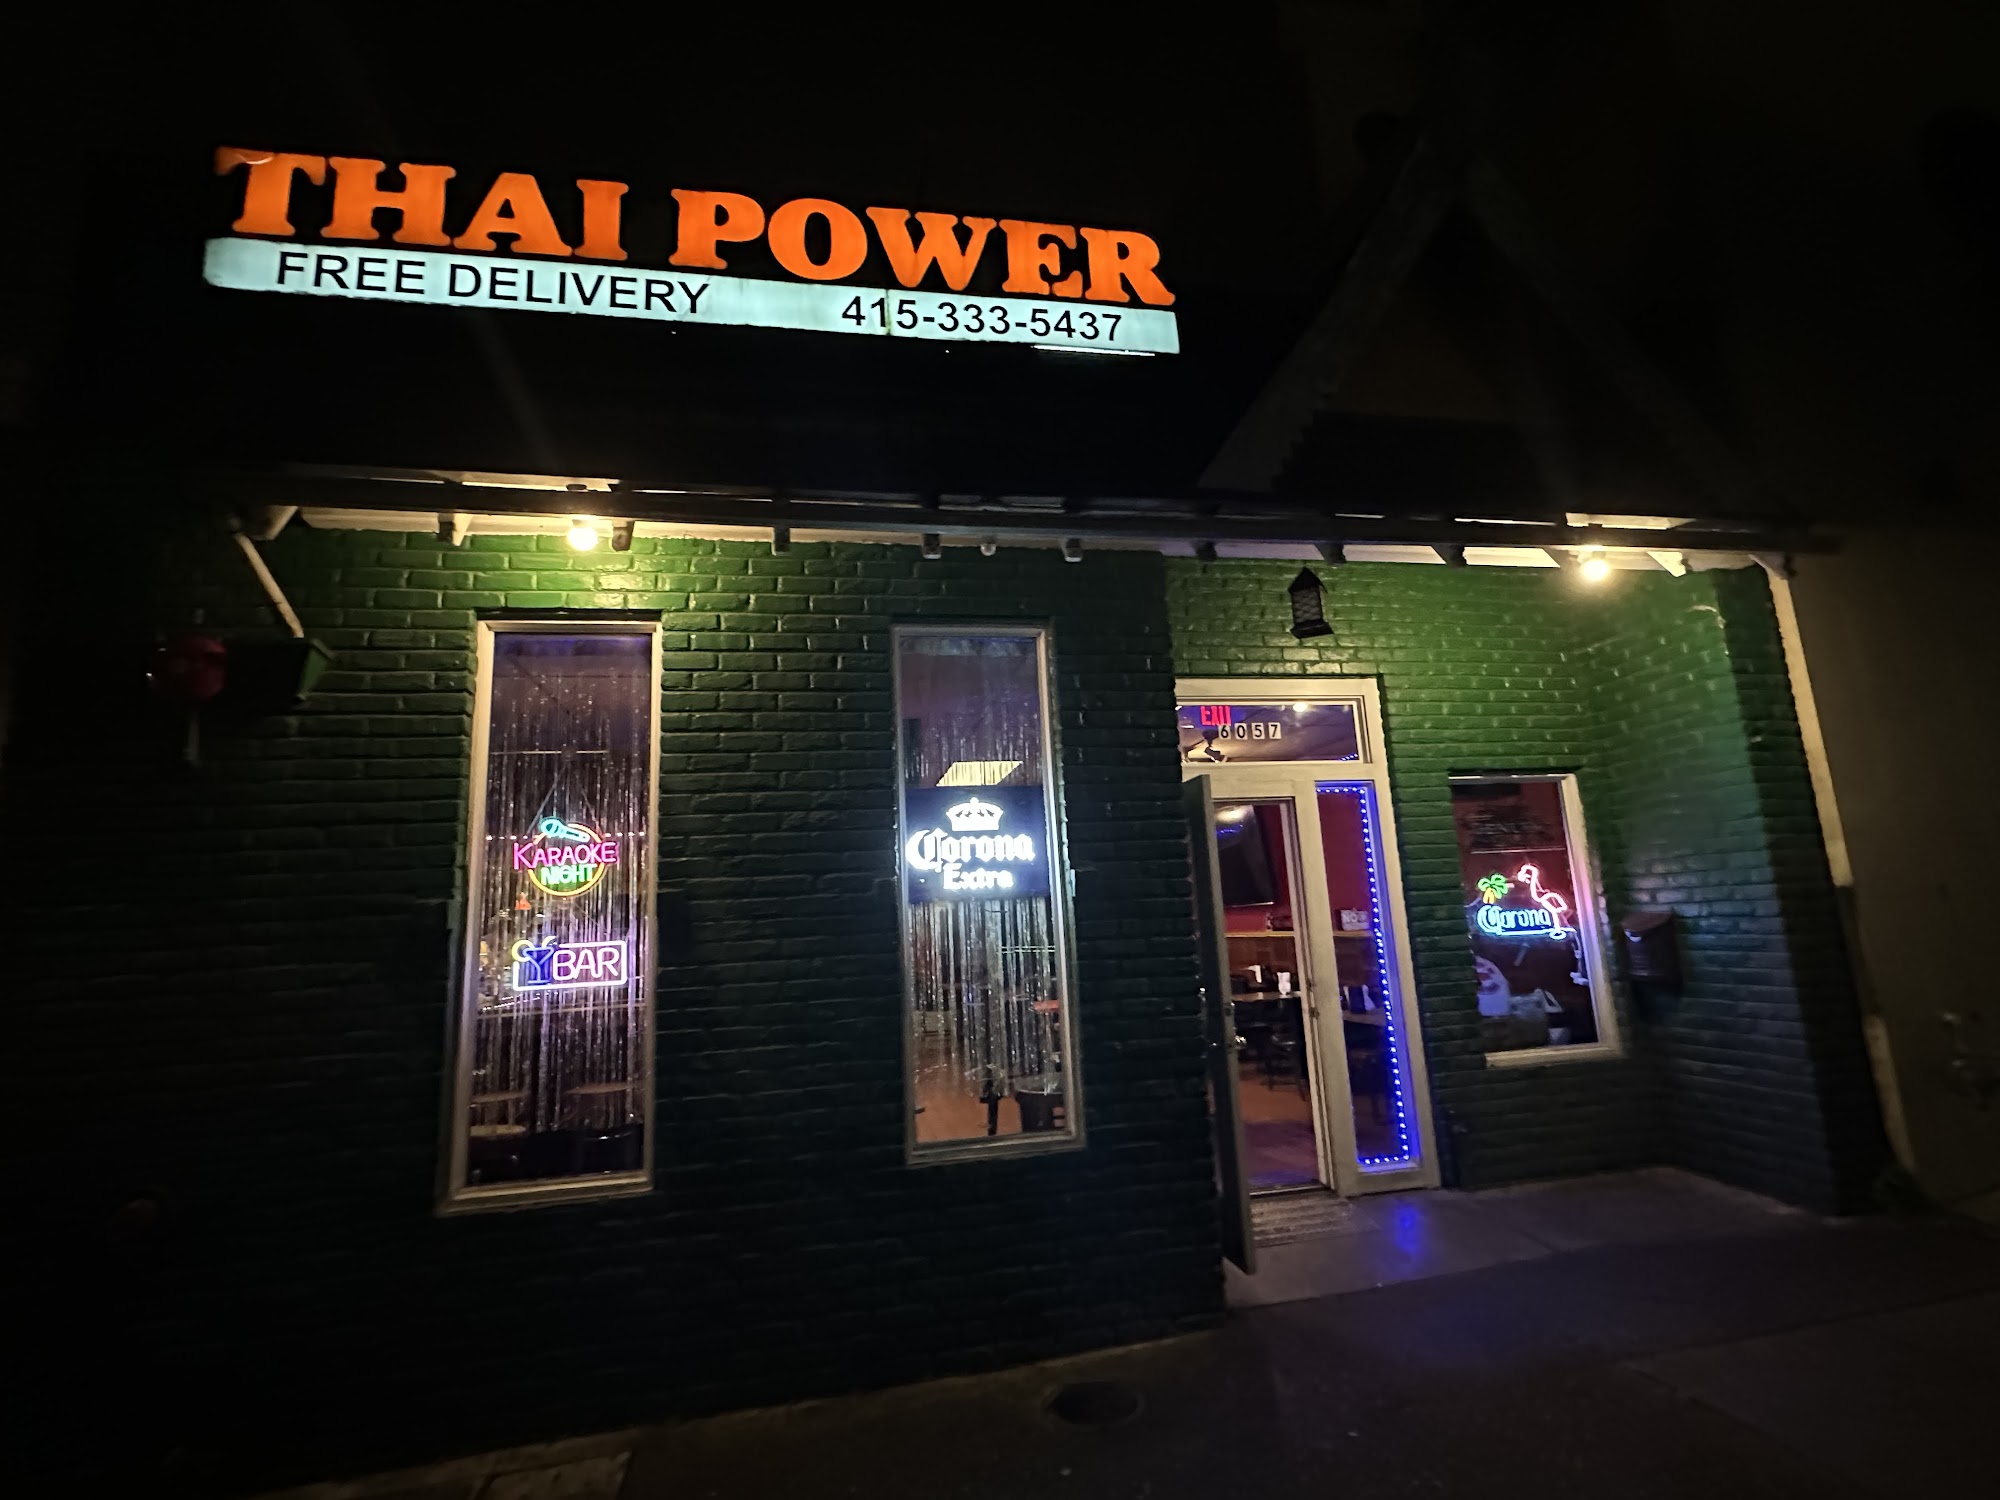 Thai Power Restaurant